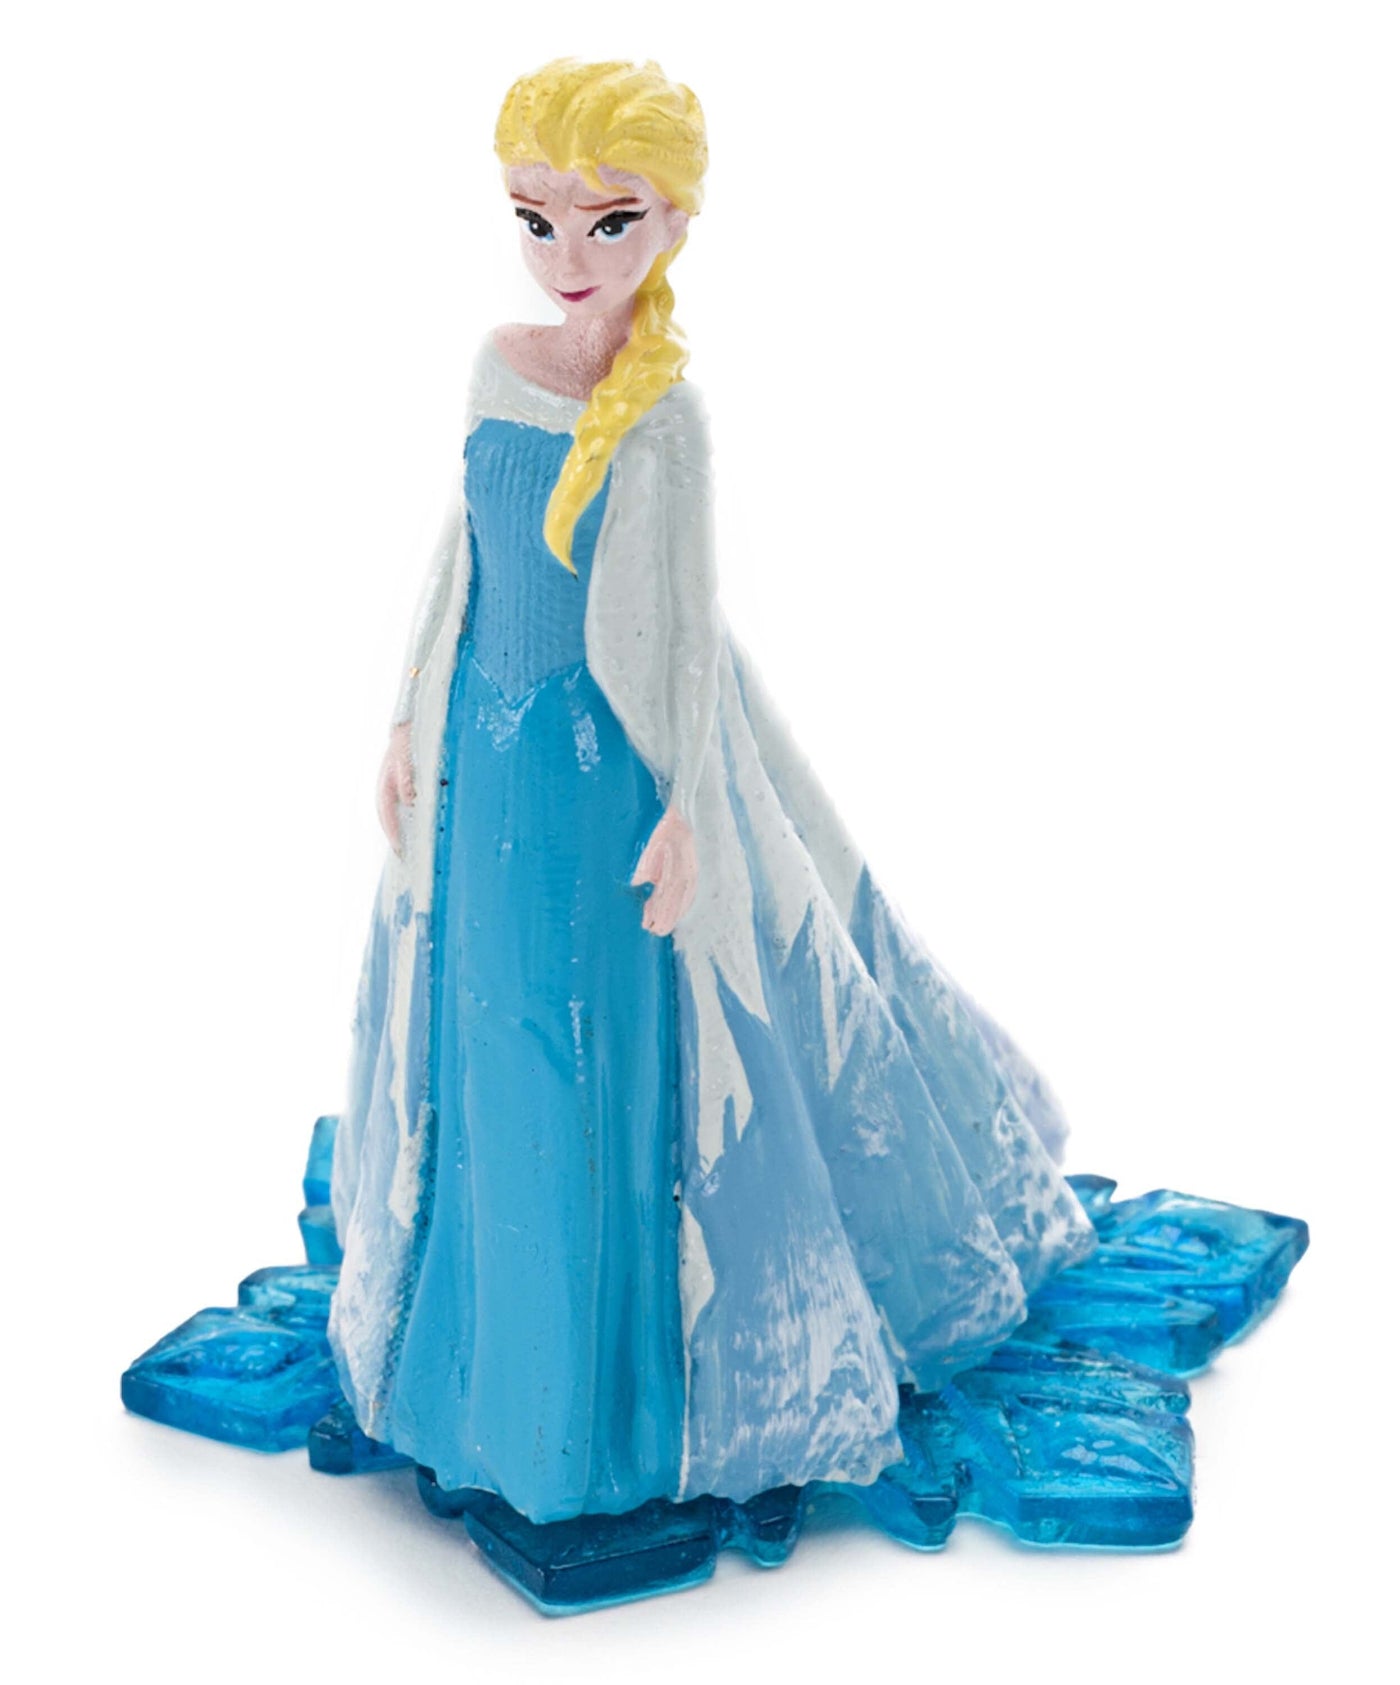 Disney Frozen Elsa Resin Ornament - Blue/White - 2.5 in - Mini